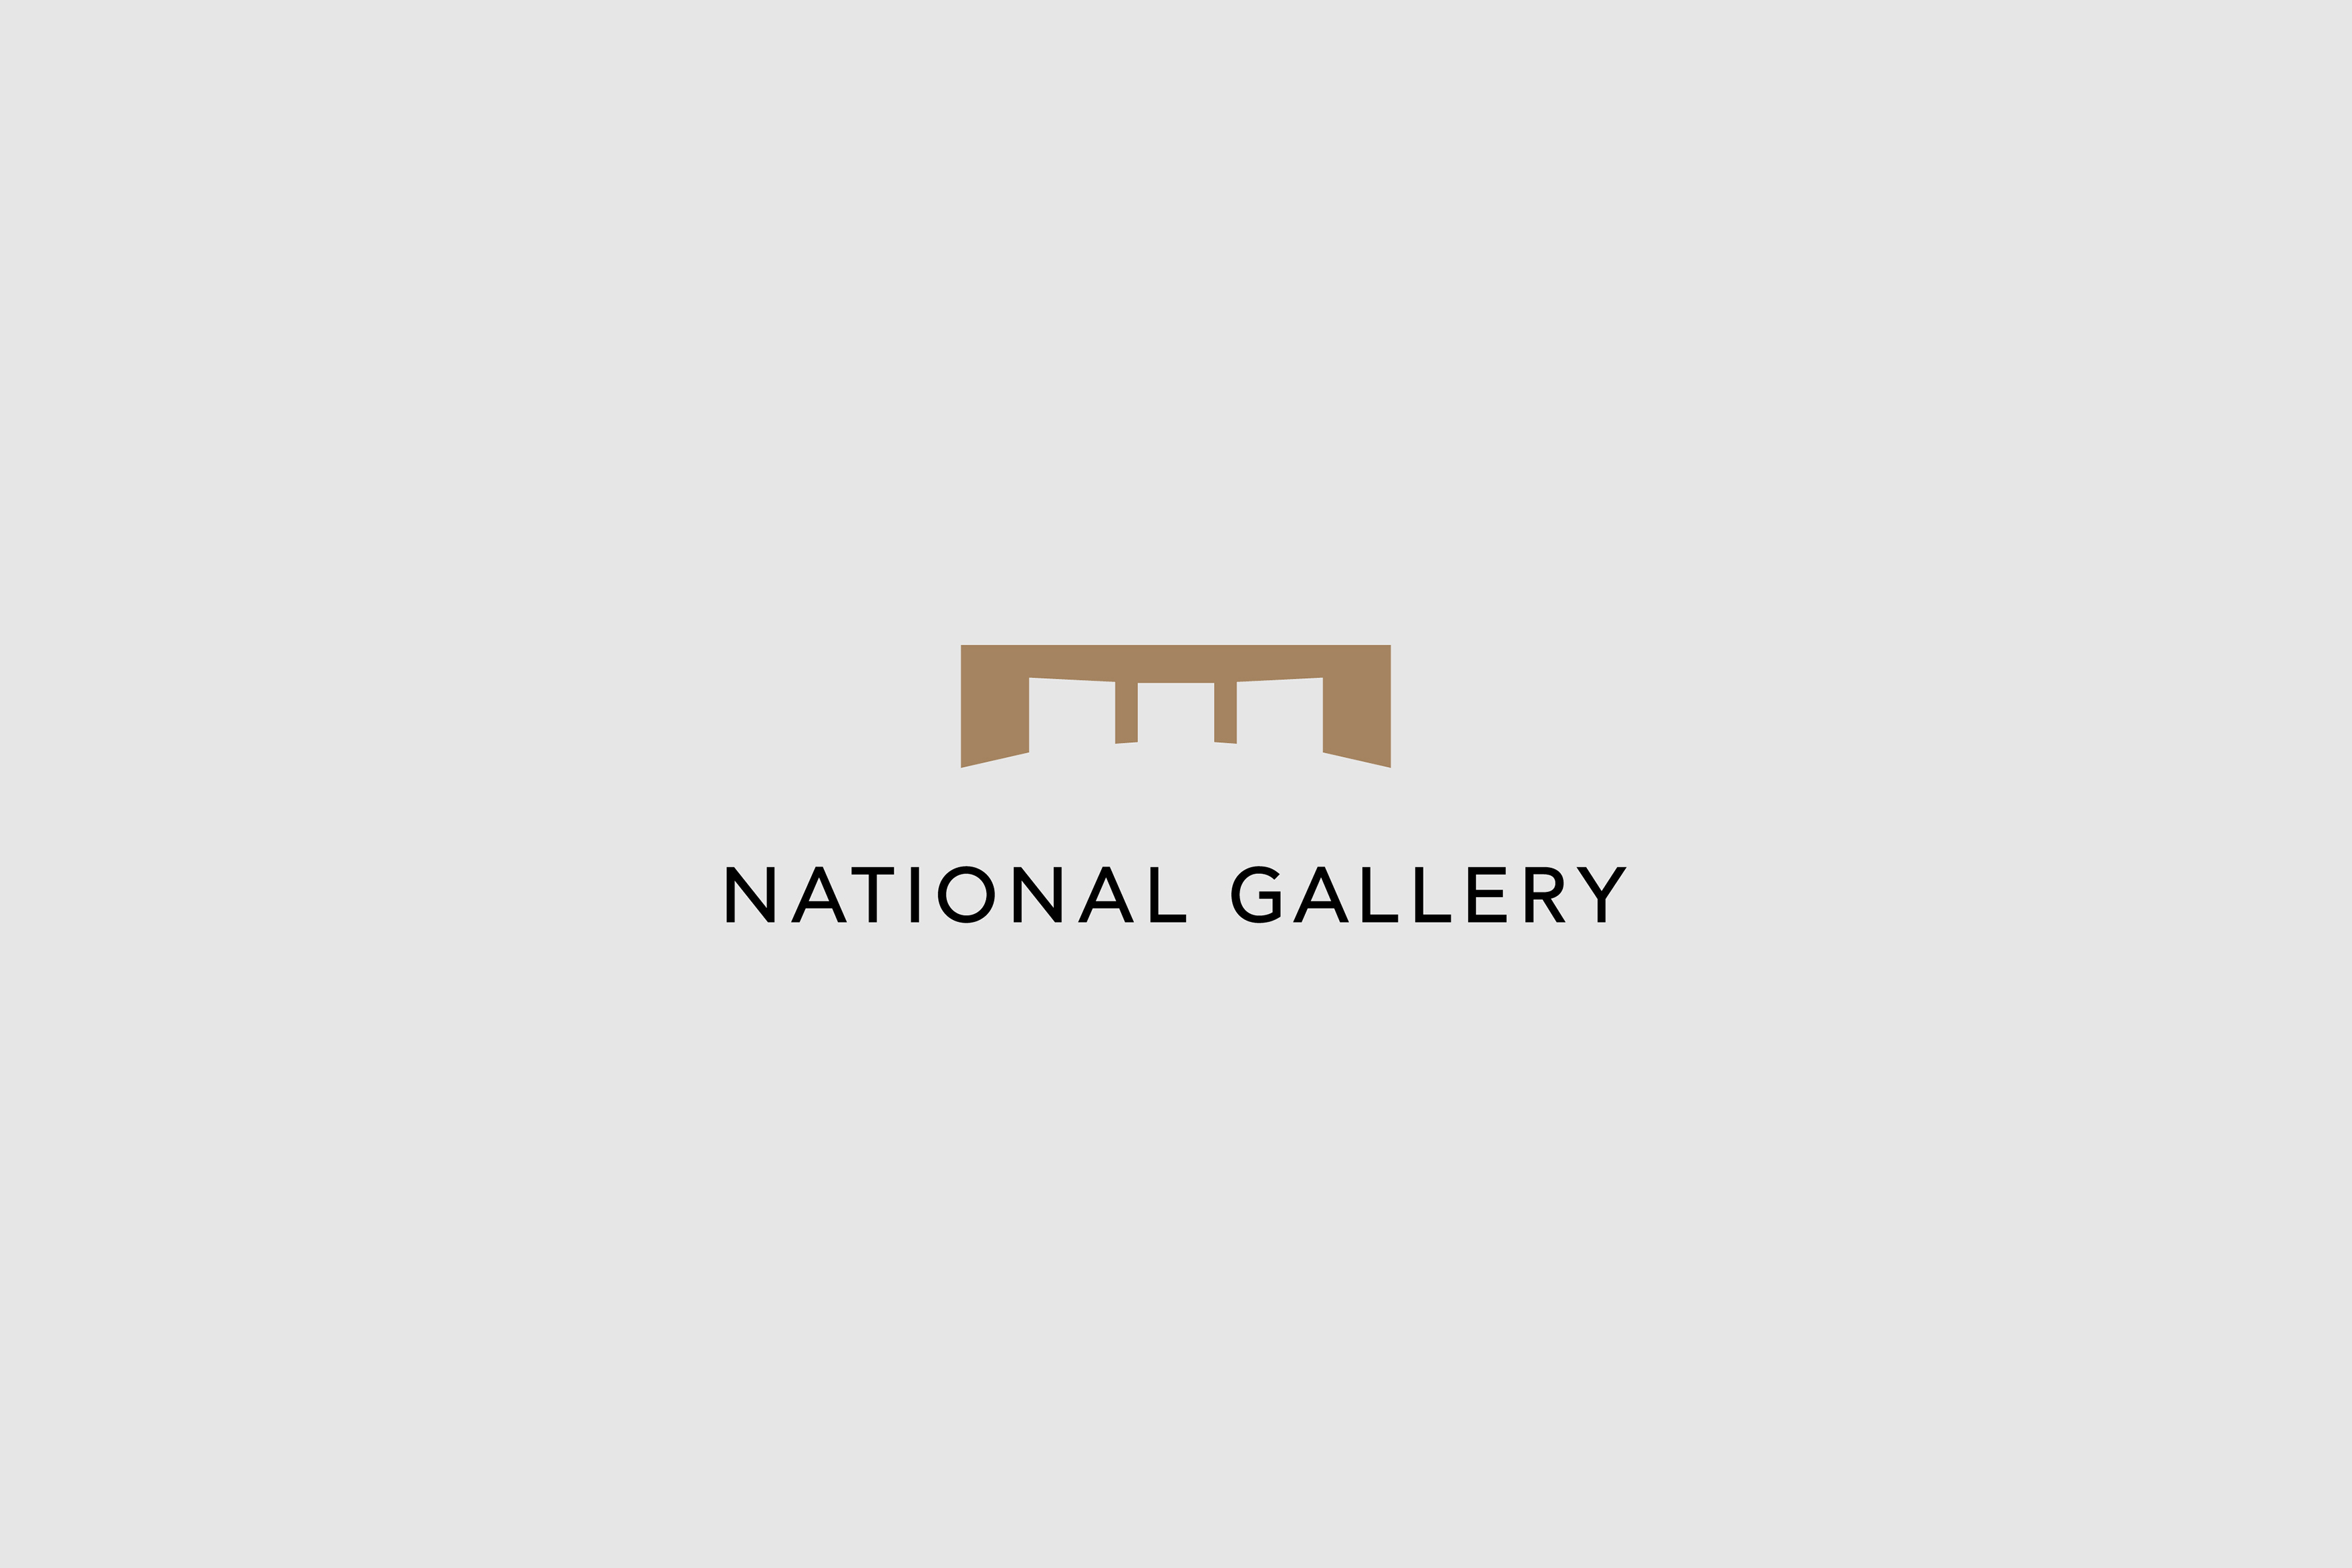 national gallery branding logo kommigraphics 1